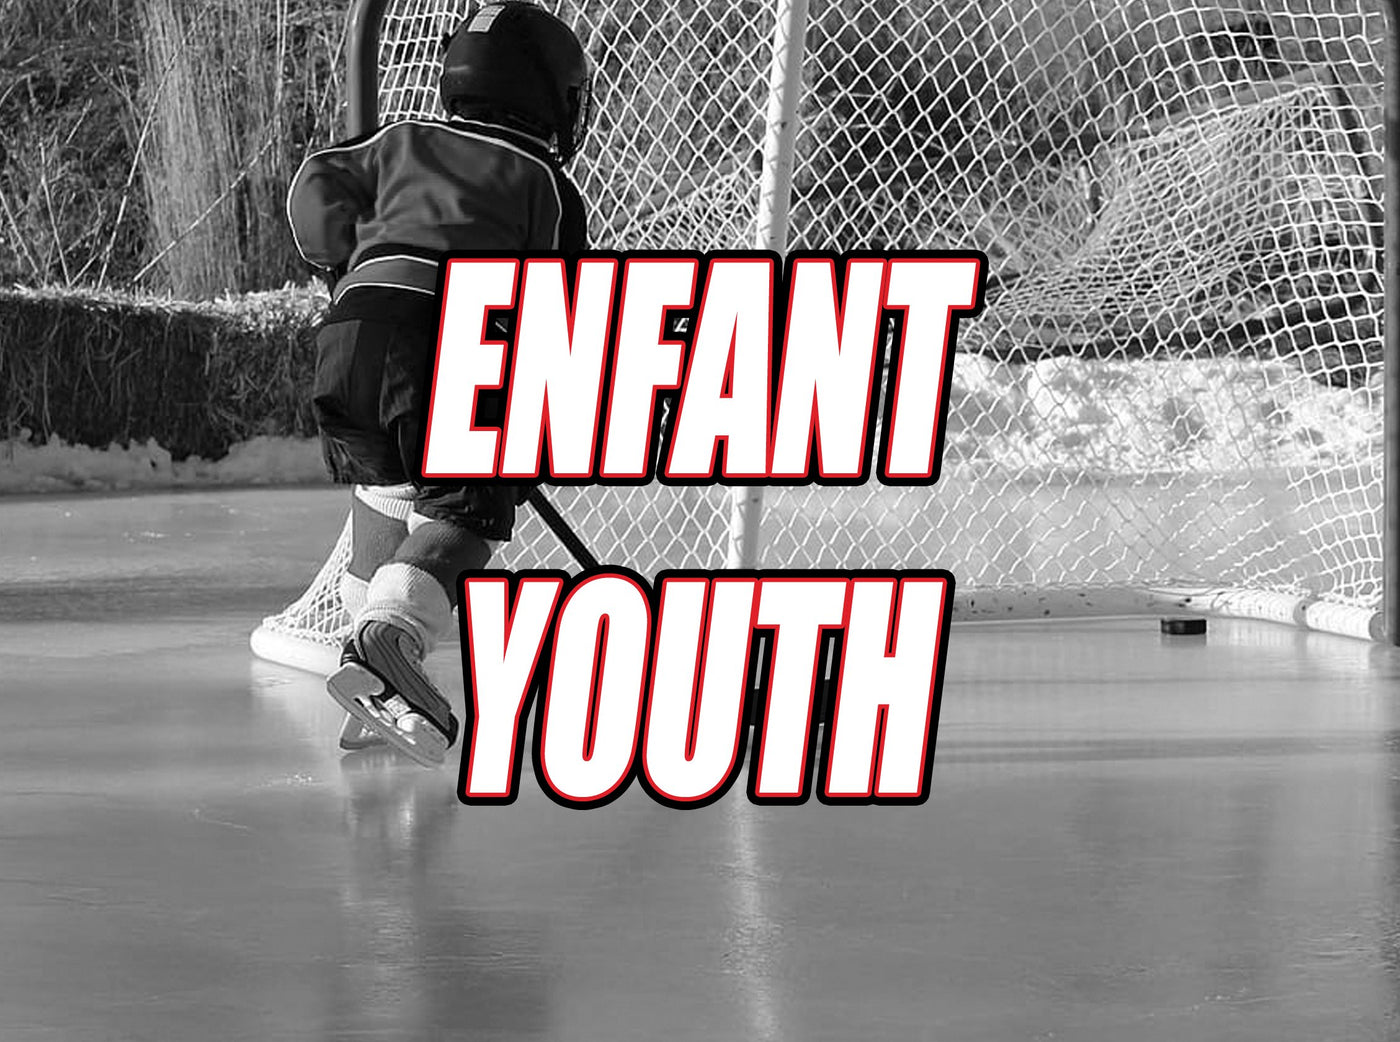 Hockey Patins Enfant / Youth